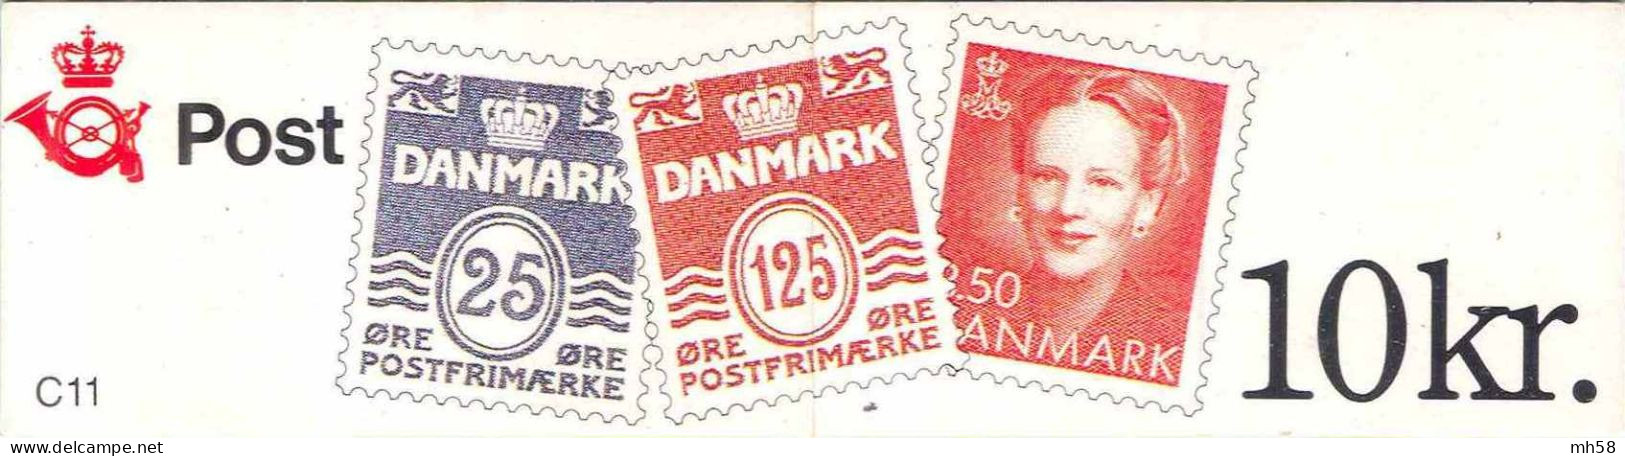 DANEMARK 1991 - Carnet / Booklet / MH Indice C11 - 10 Kr Chiffres / Reine Margarethe - YT C 976 I / MI MH 43 - Markenheftchen